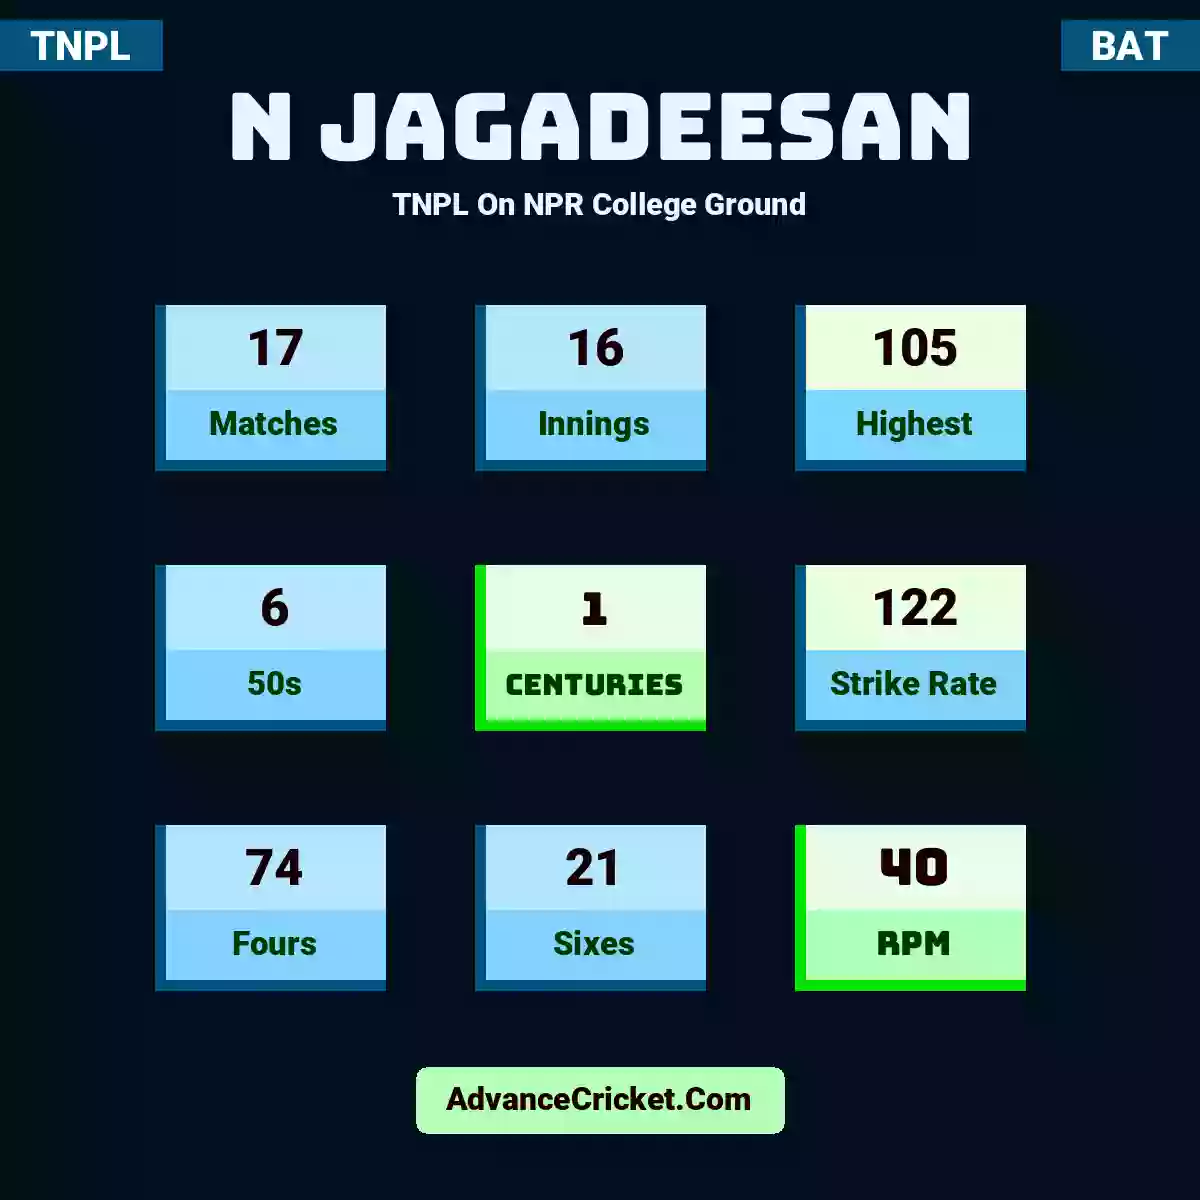 N Jagadeesan TNPL  On NPR College Ground, N Jagadeesan played 17 matches, scored 105 runs as highest, 6 half-centuries, and 1 centuries, with a strike rate of 122. N.Jagadeesan hit 74 fours and 21 sixes, with an RPM of 40.